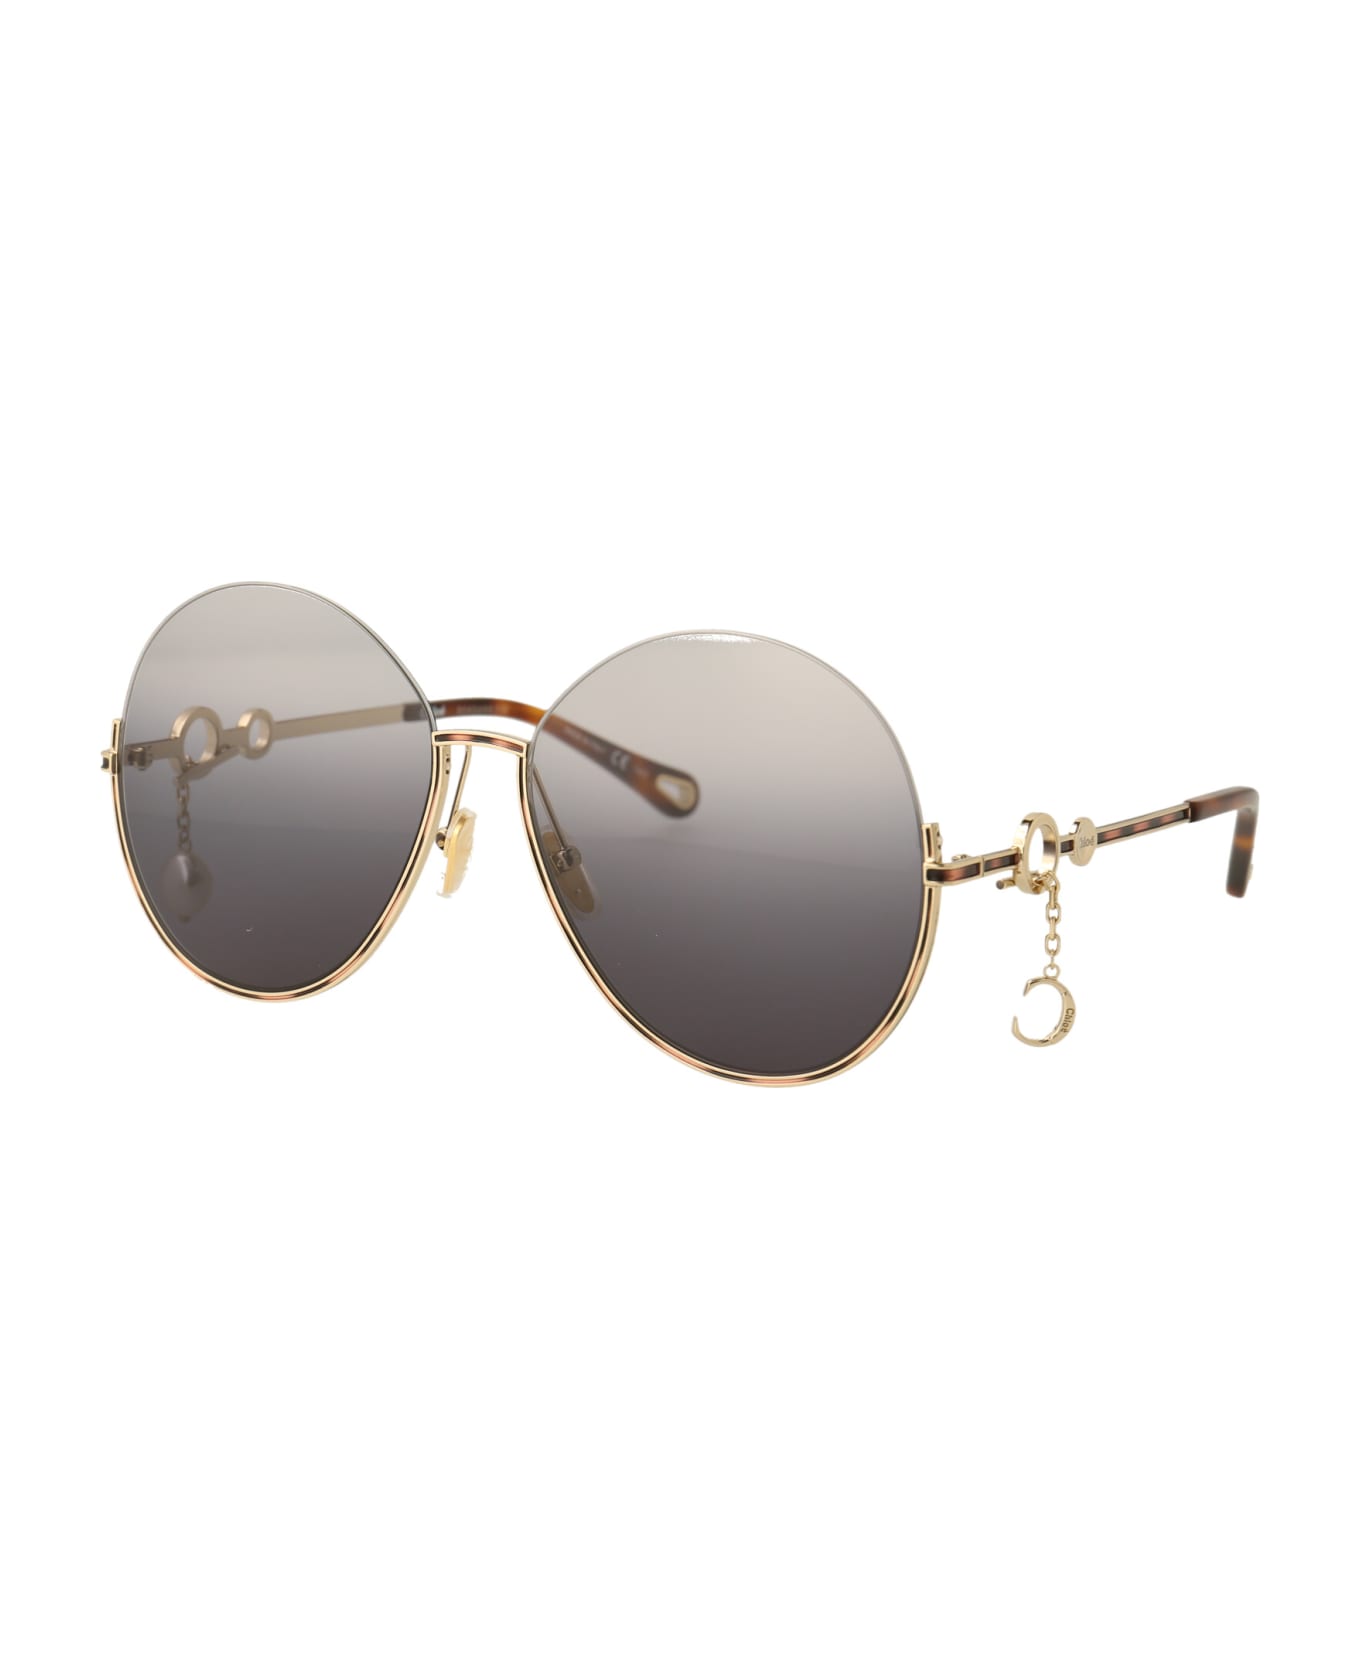 Chloé Eyewear Ch0067s Sunglasses - 001 GOLD GOLD BLUE